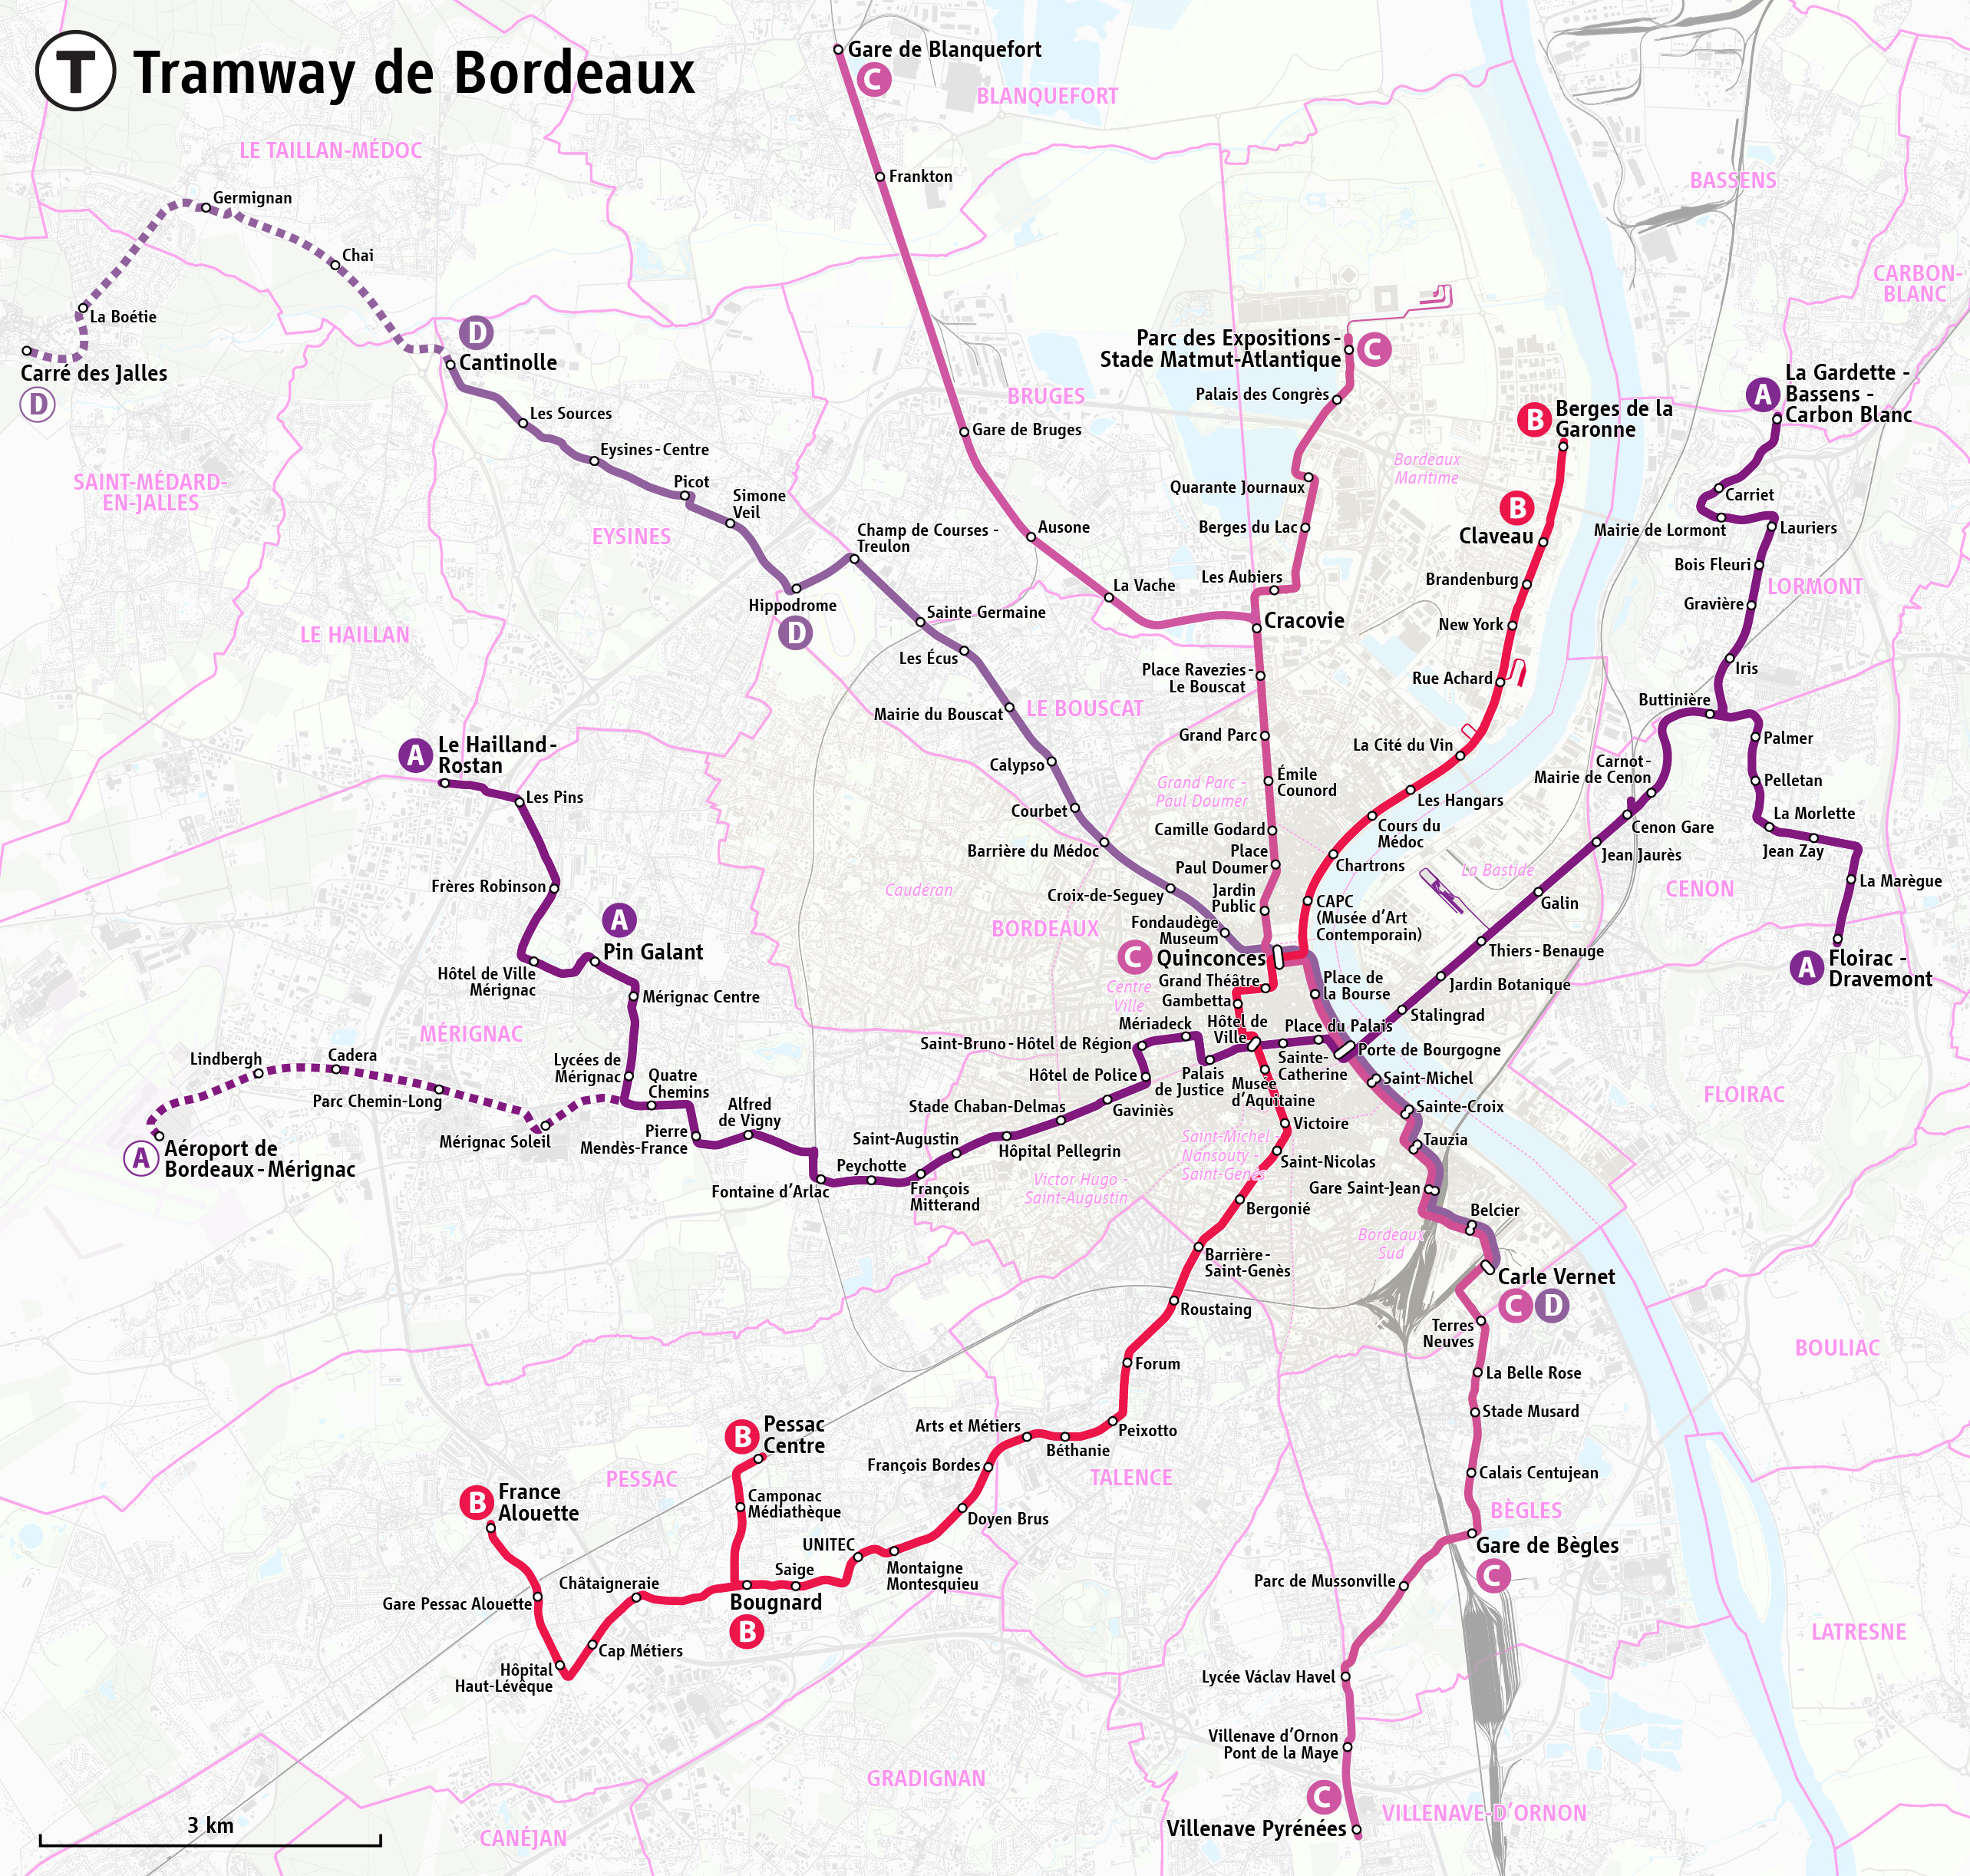 Схема трамвайной сети города Бордо